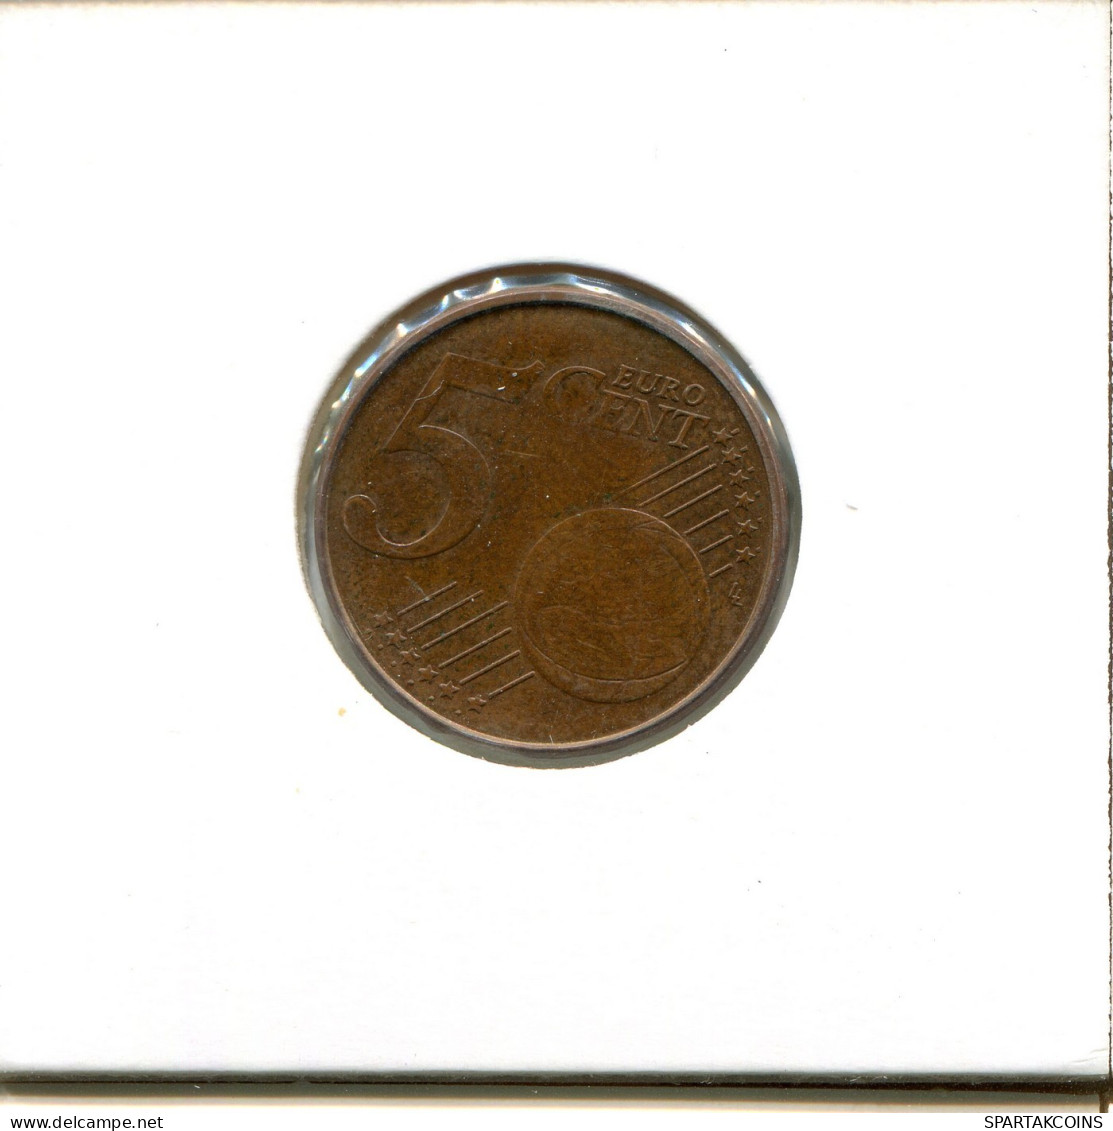 5 EURO CENTS 2005 BELGIEN BELGIUM Münze #EU416.D.A - Bélgica